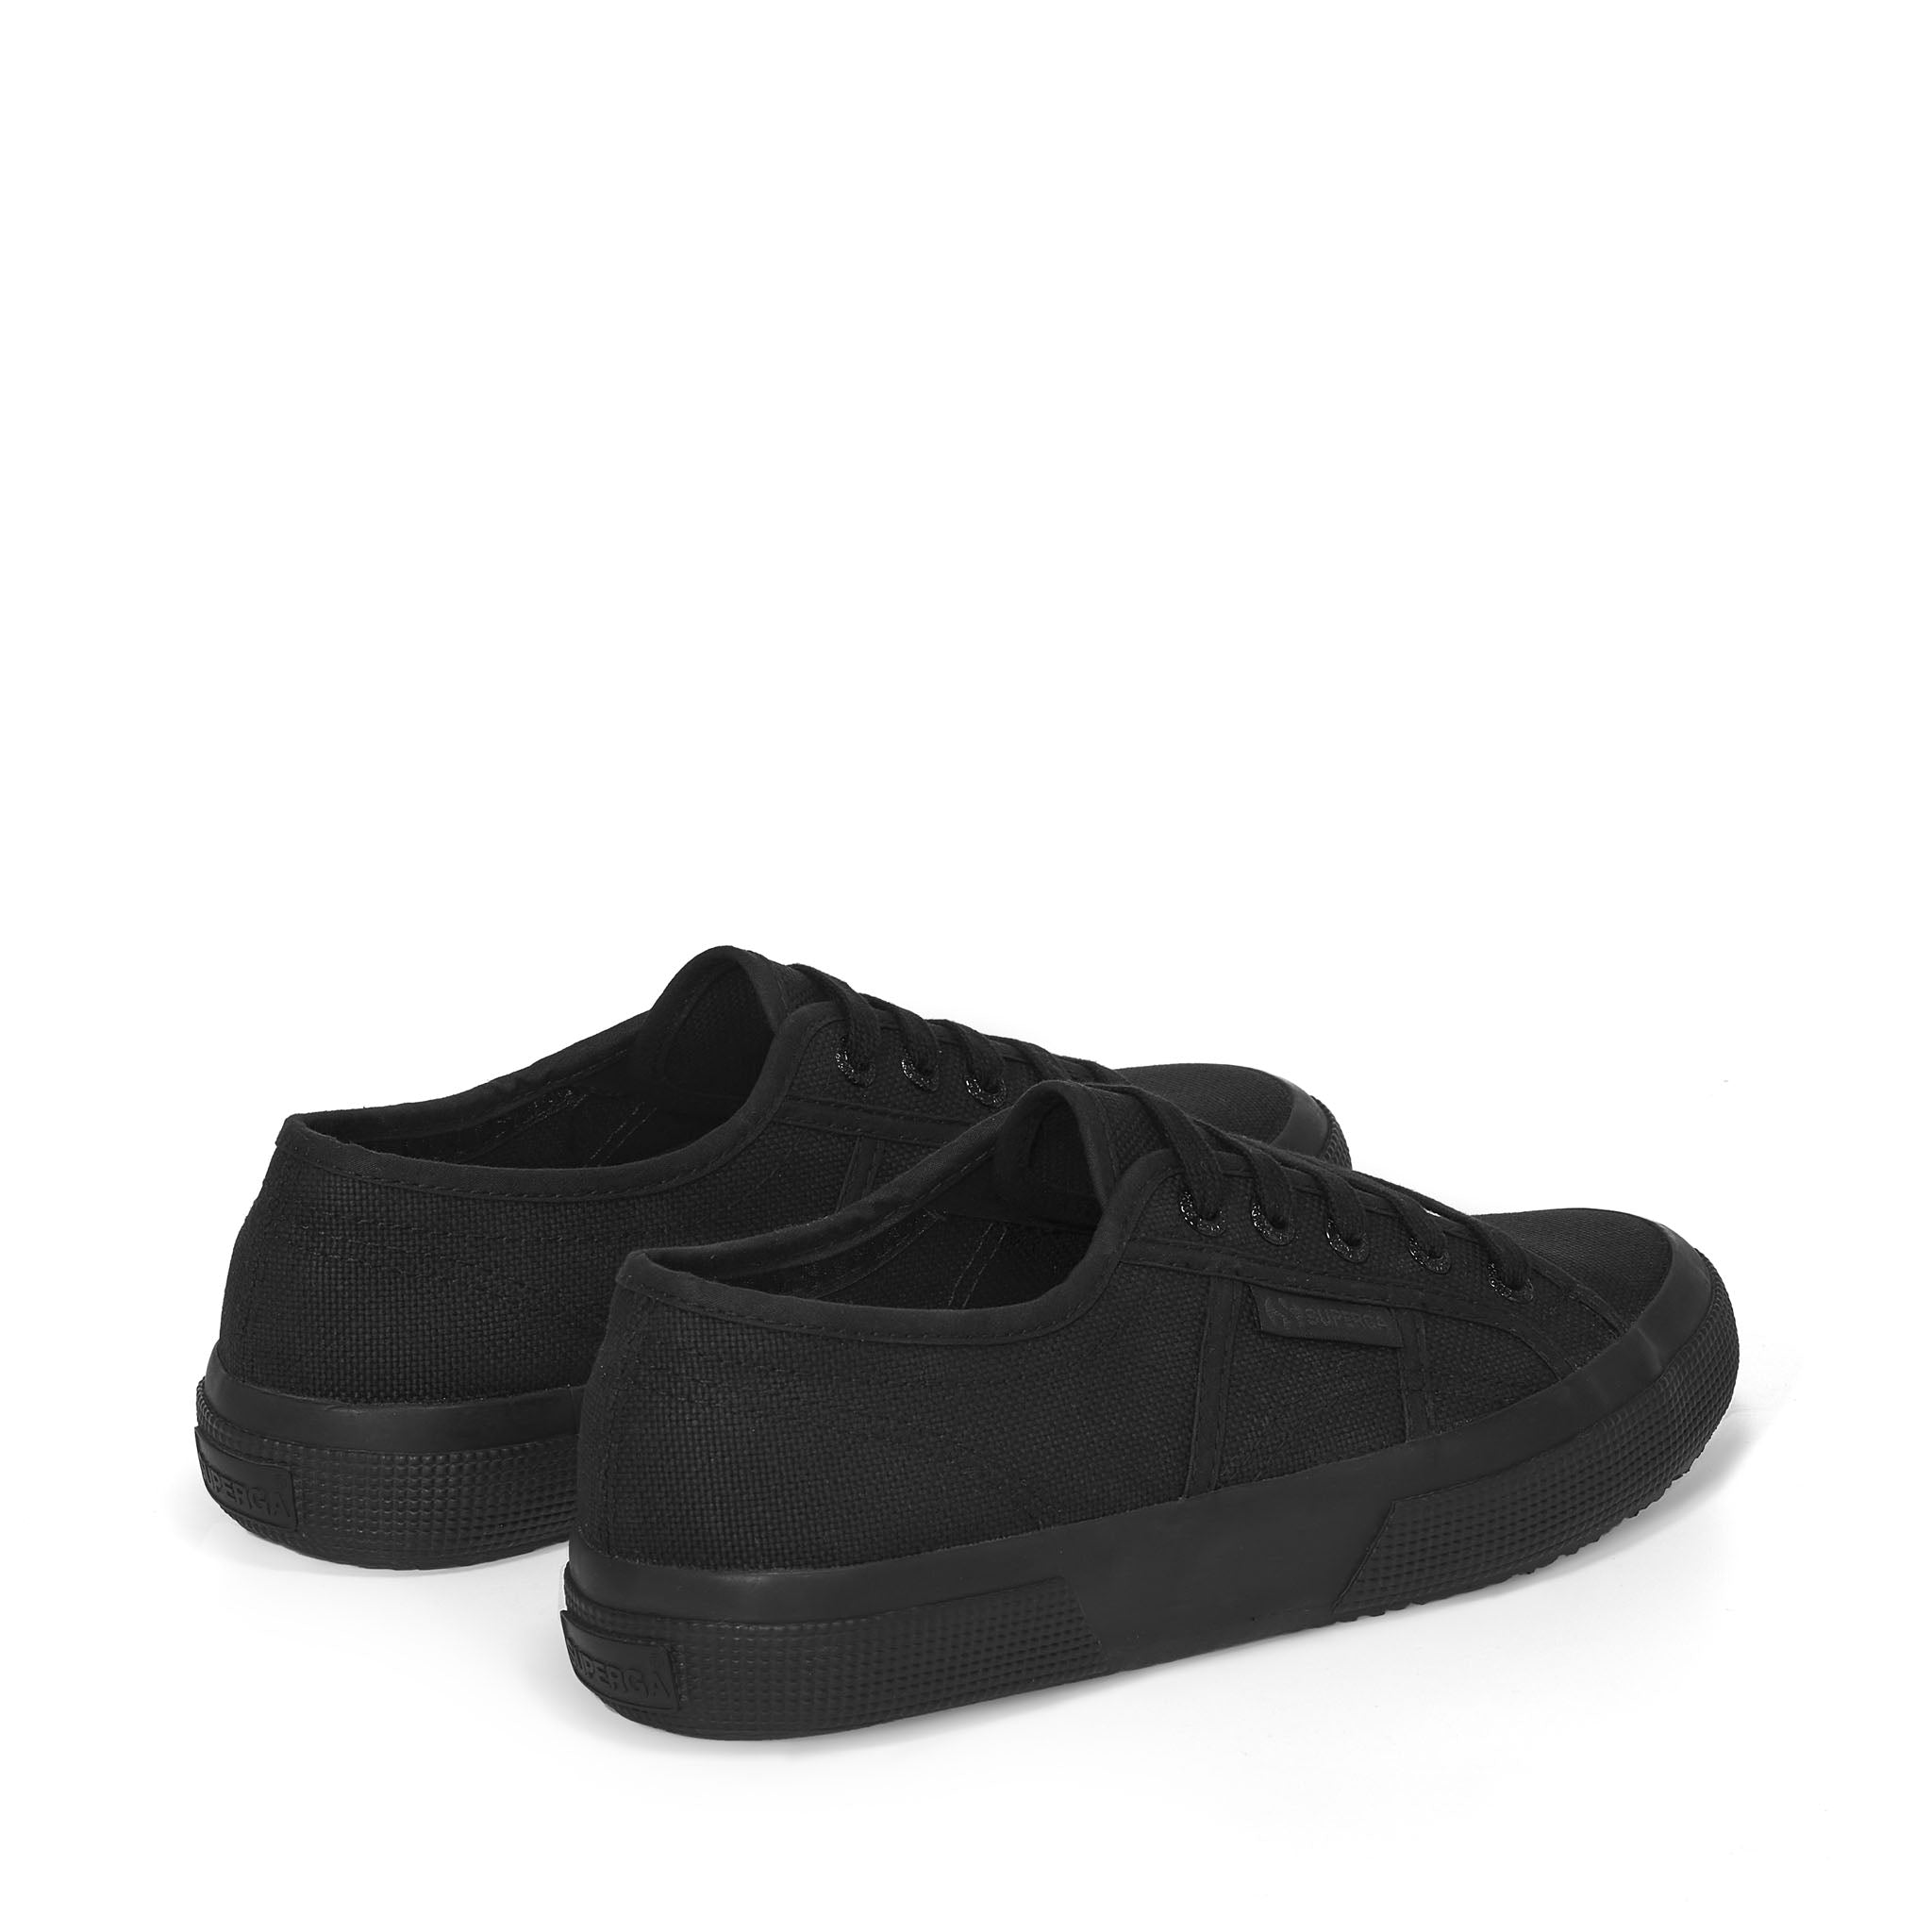 Superga 2790 Platform Sneakers, Black | Size: 6.5W/5M/37EU